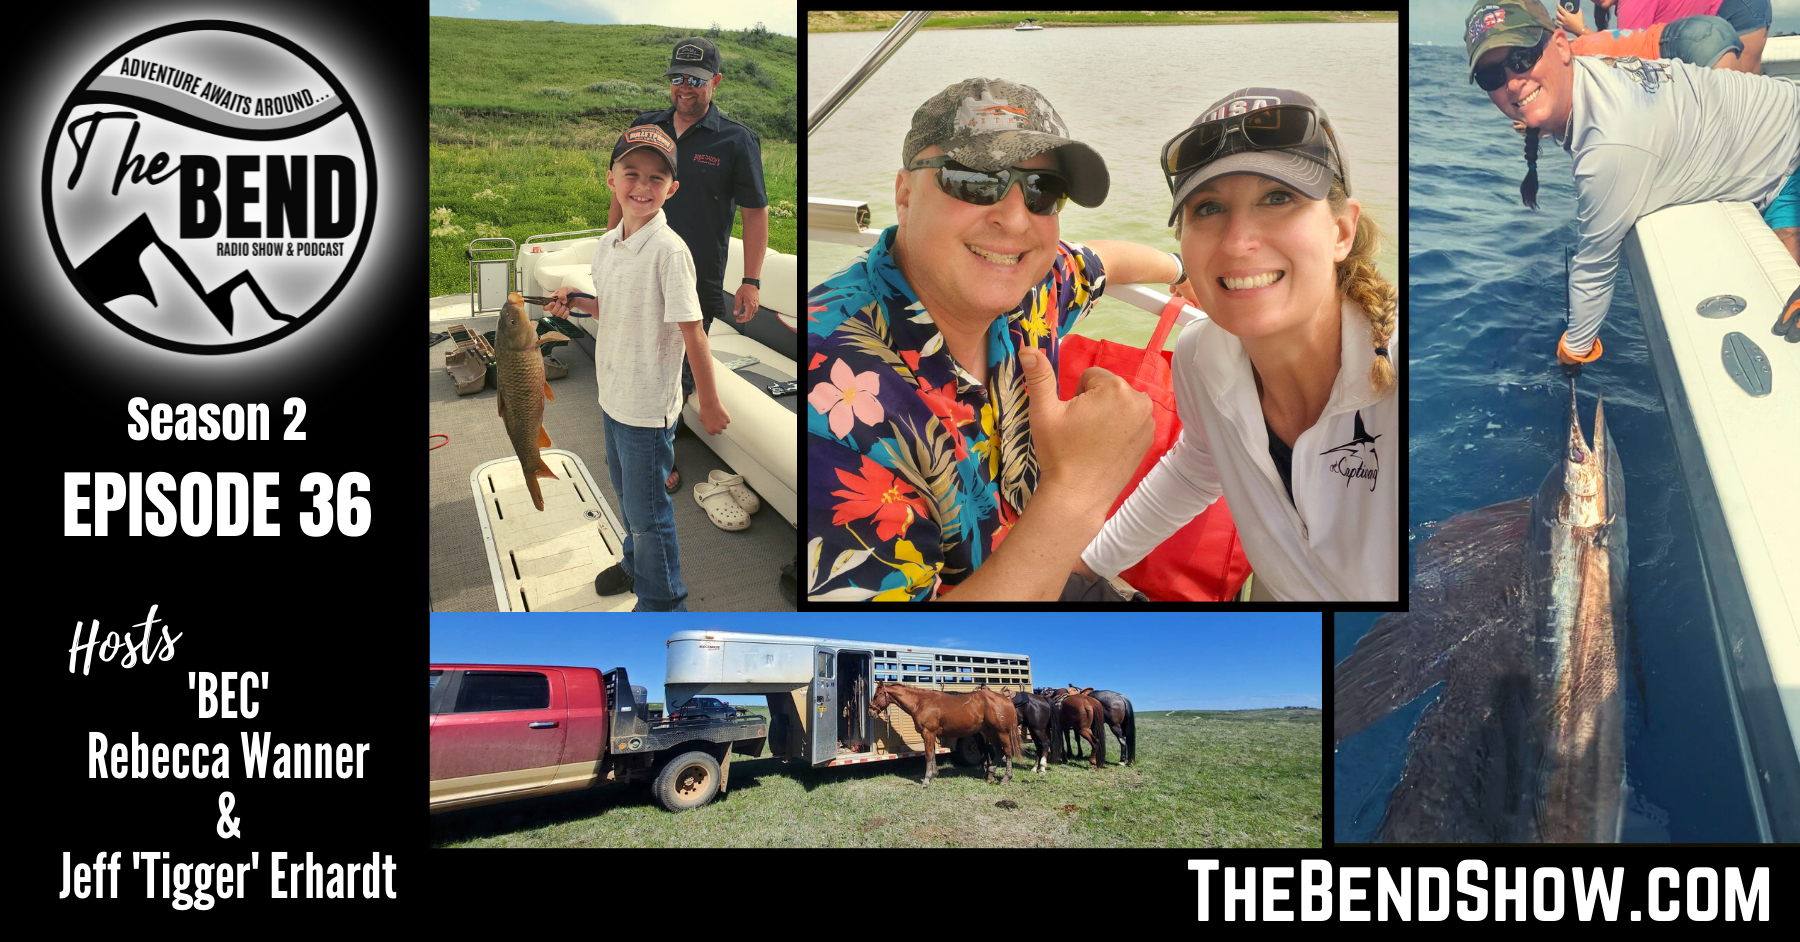 The BEND S2 E36 Website & Radio Outdoors Fishing Livestock Campi